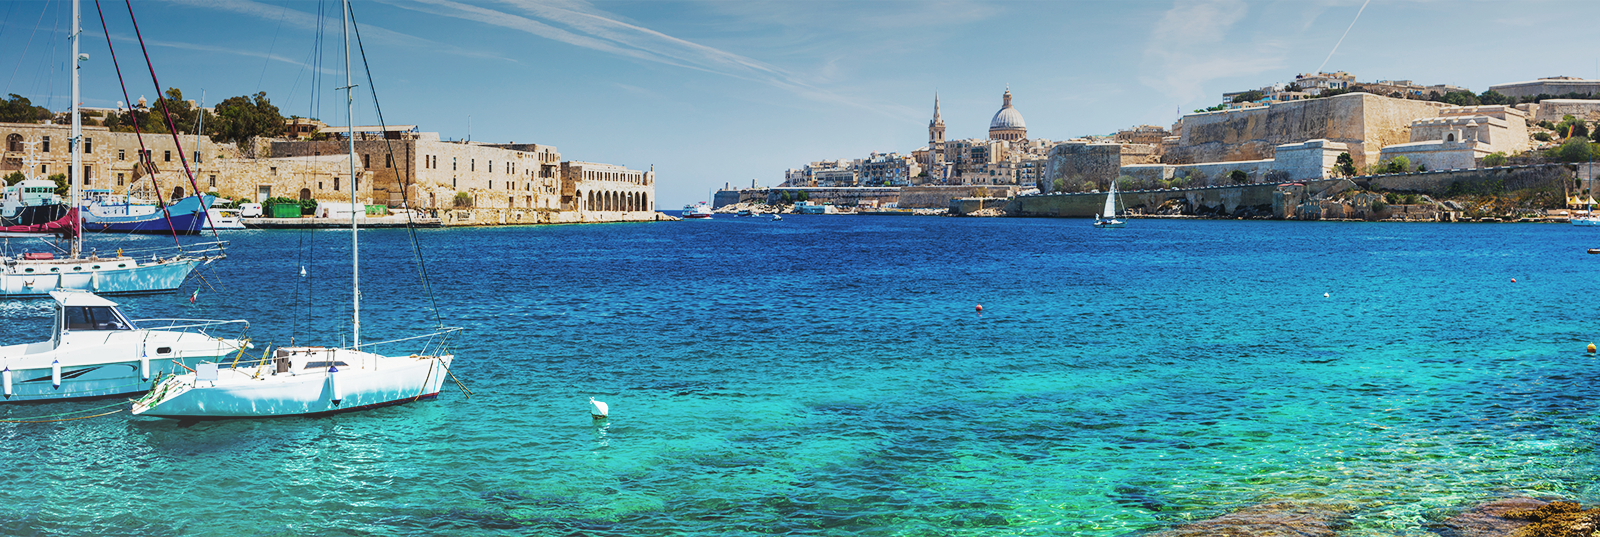 Guía turística de Malta